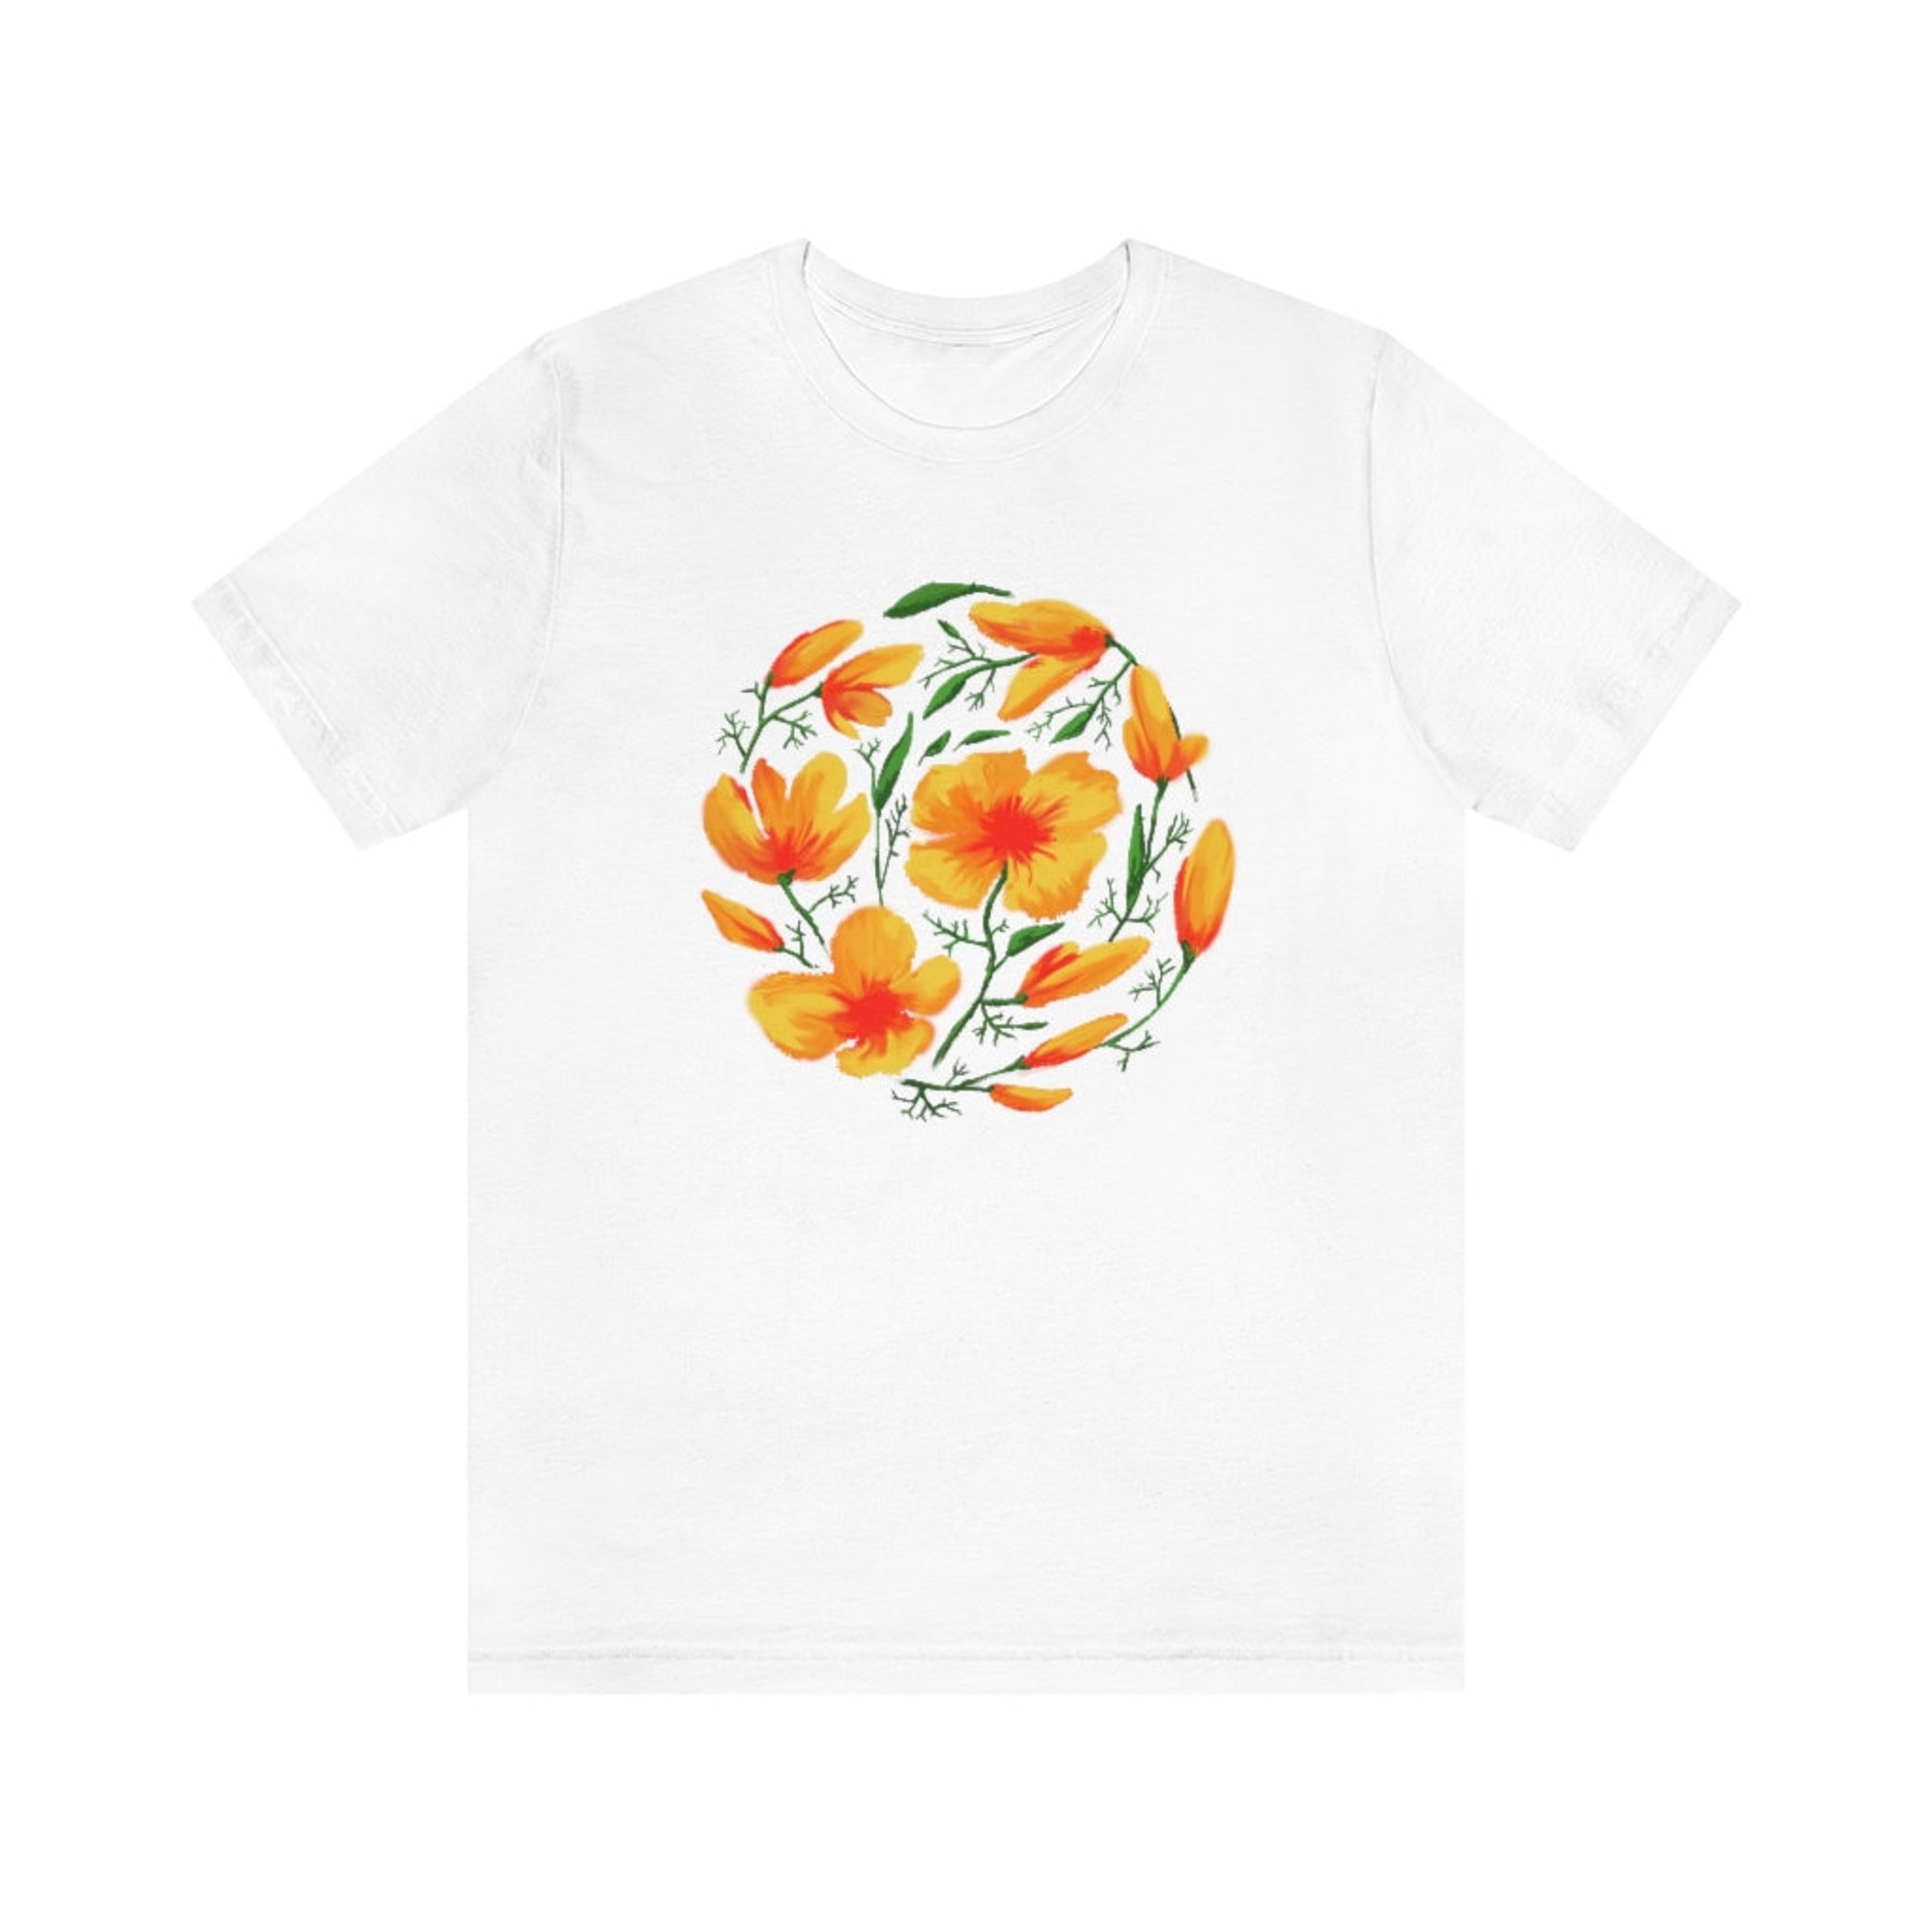 Discover California Poppy Shirt Wild Flower T Shirt Orange Poppy Floral Shirt Poppies Flowers Tee Poppy Tshirt Canvas Bella Shirt California t shirt